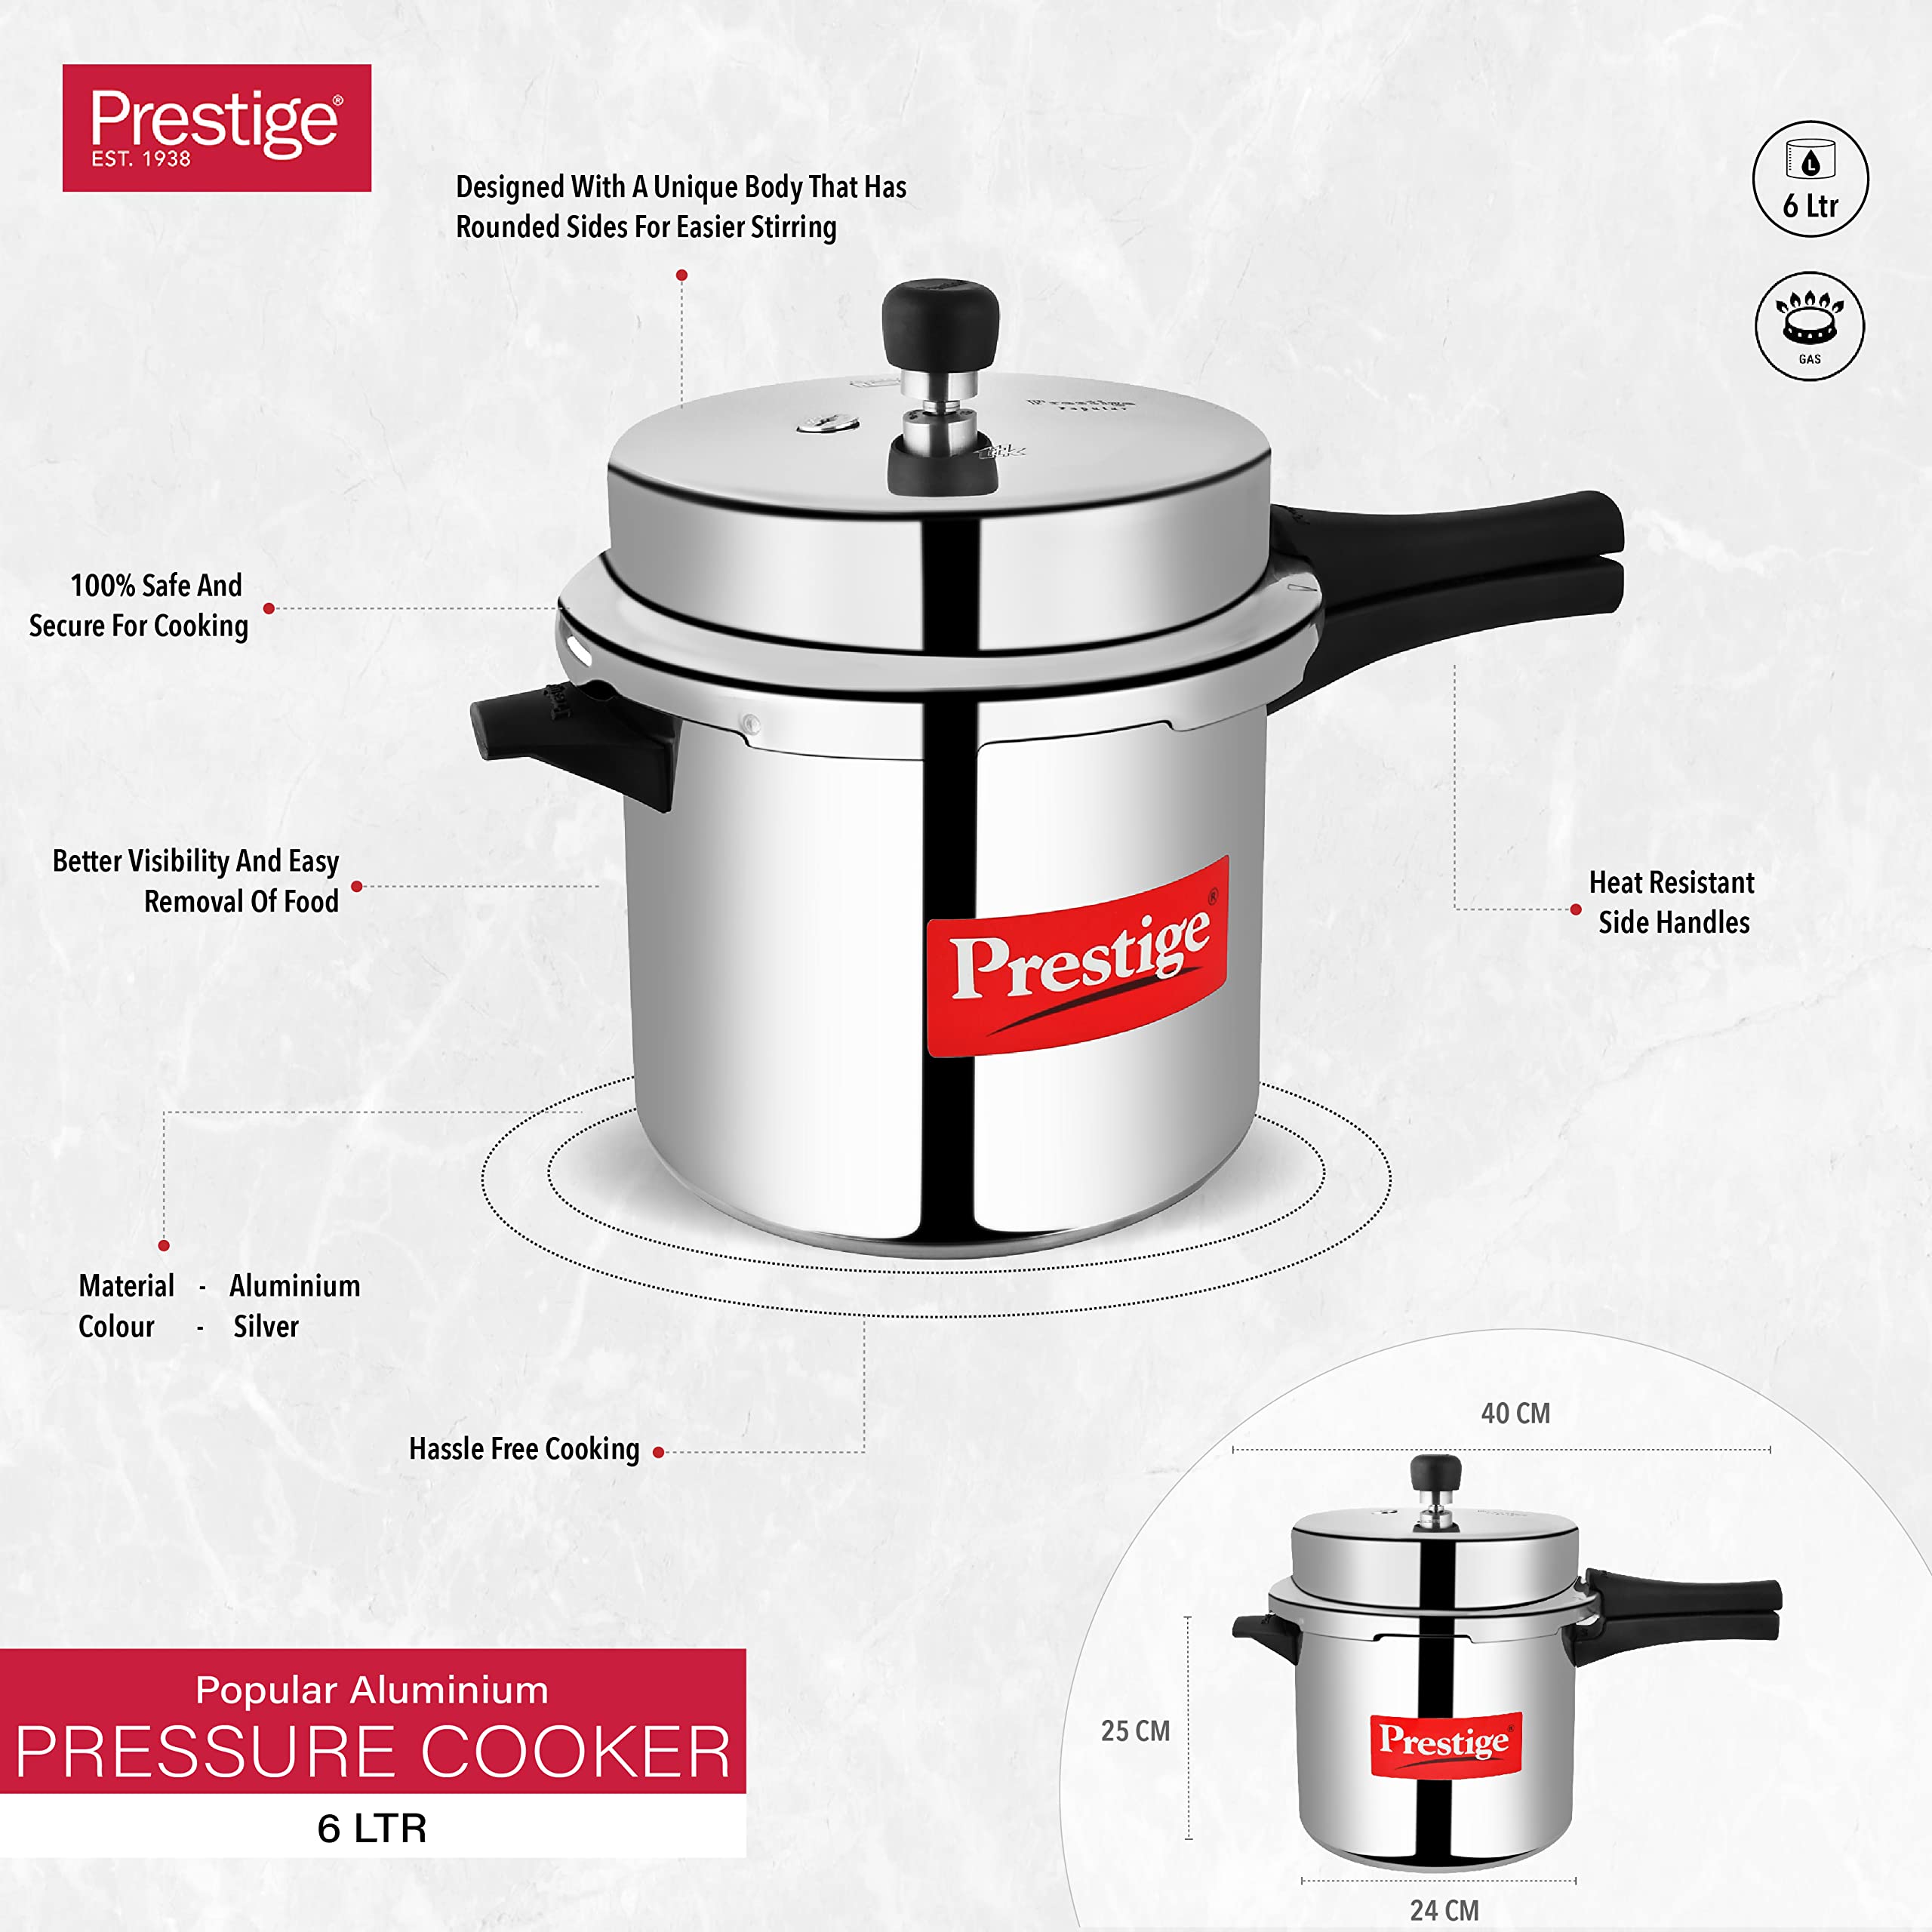 Prestige Popular Aluminium Pressure Cooker Silver, 6 Ltr - PPAPC6